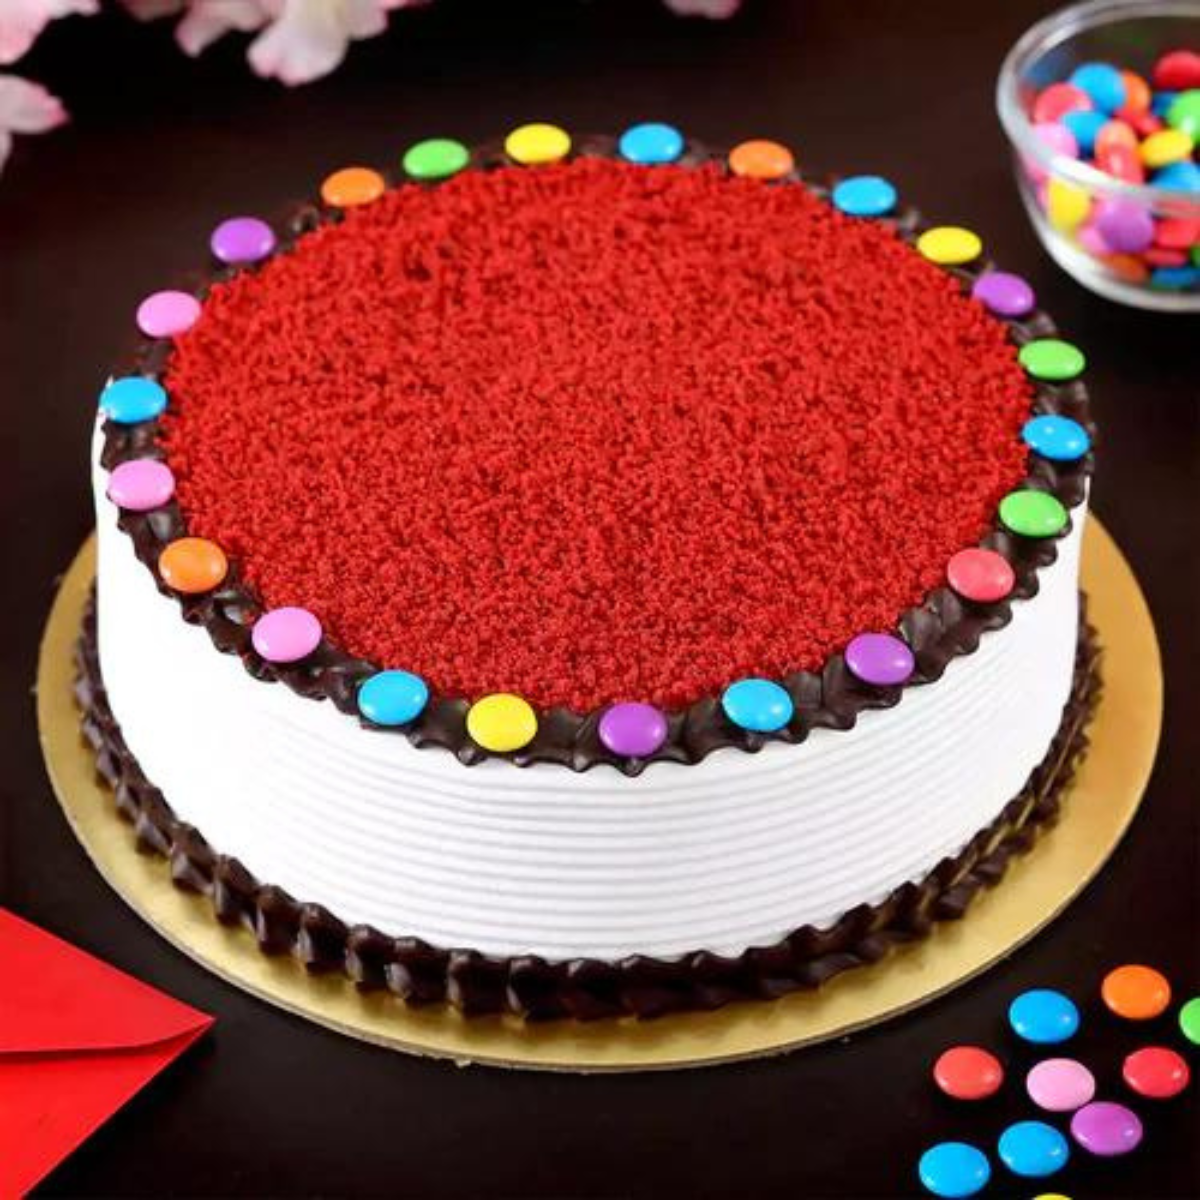 Birthday Cake - Half Kg Eggless Cake | Send Cakes Online India to India -  Flora2000